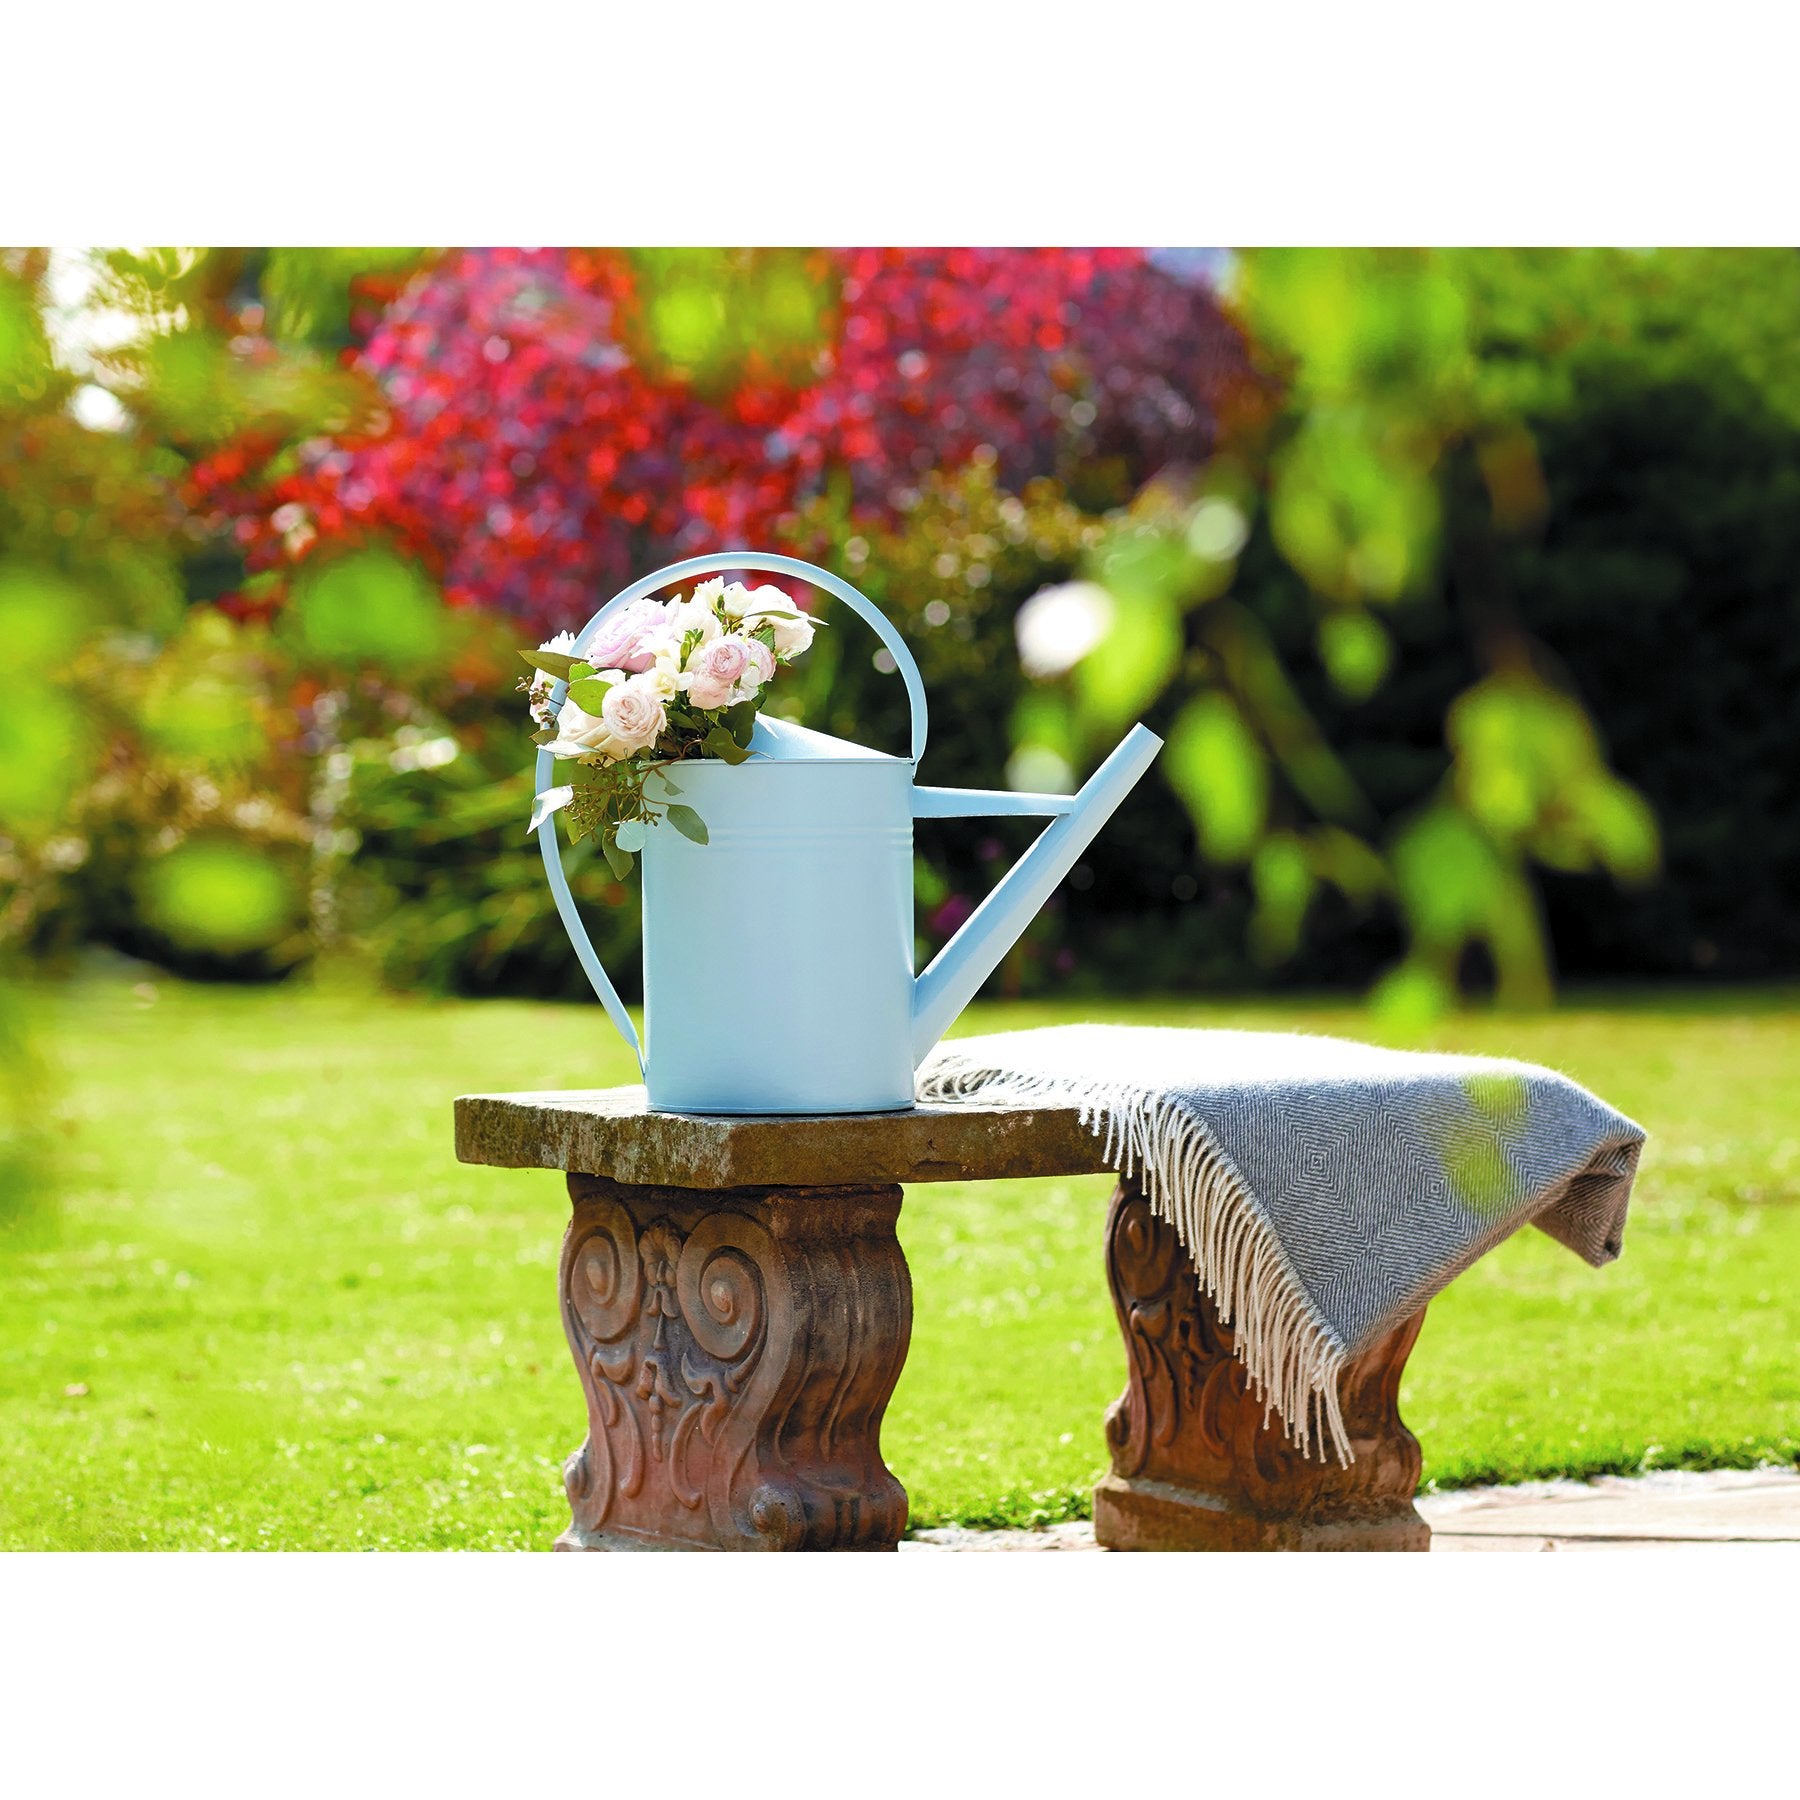 Ronseal Garden Paint - Cool Breeze 750Ml  Garden & Diy  Home Improvements  Outdoor Paints And Stains